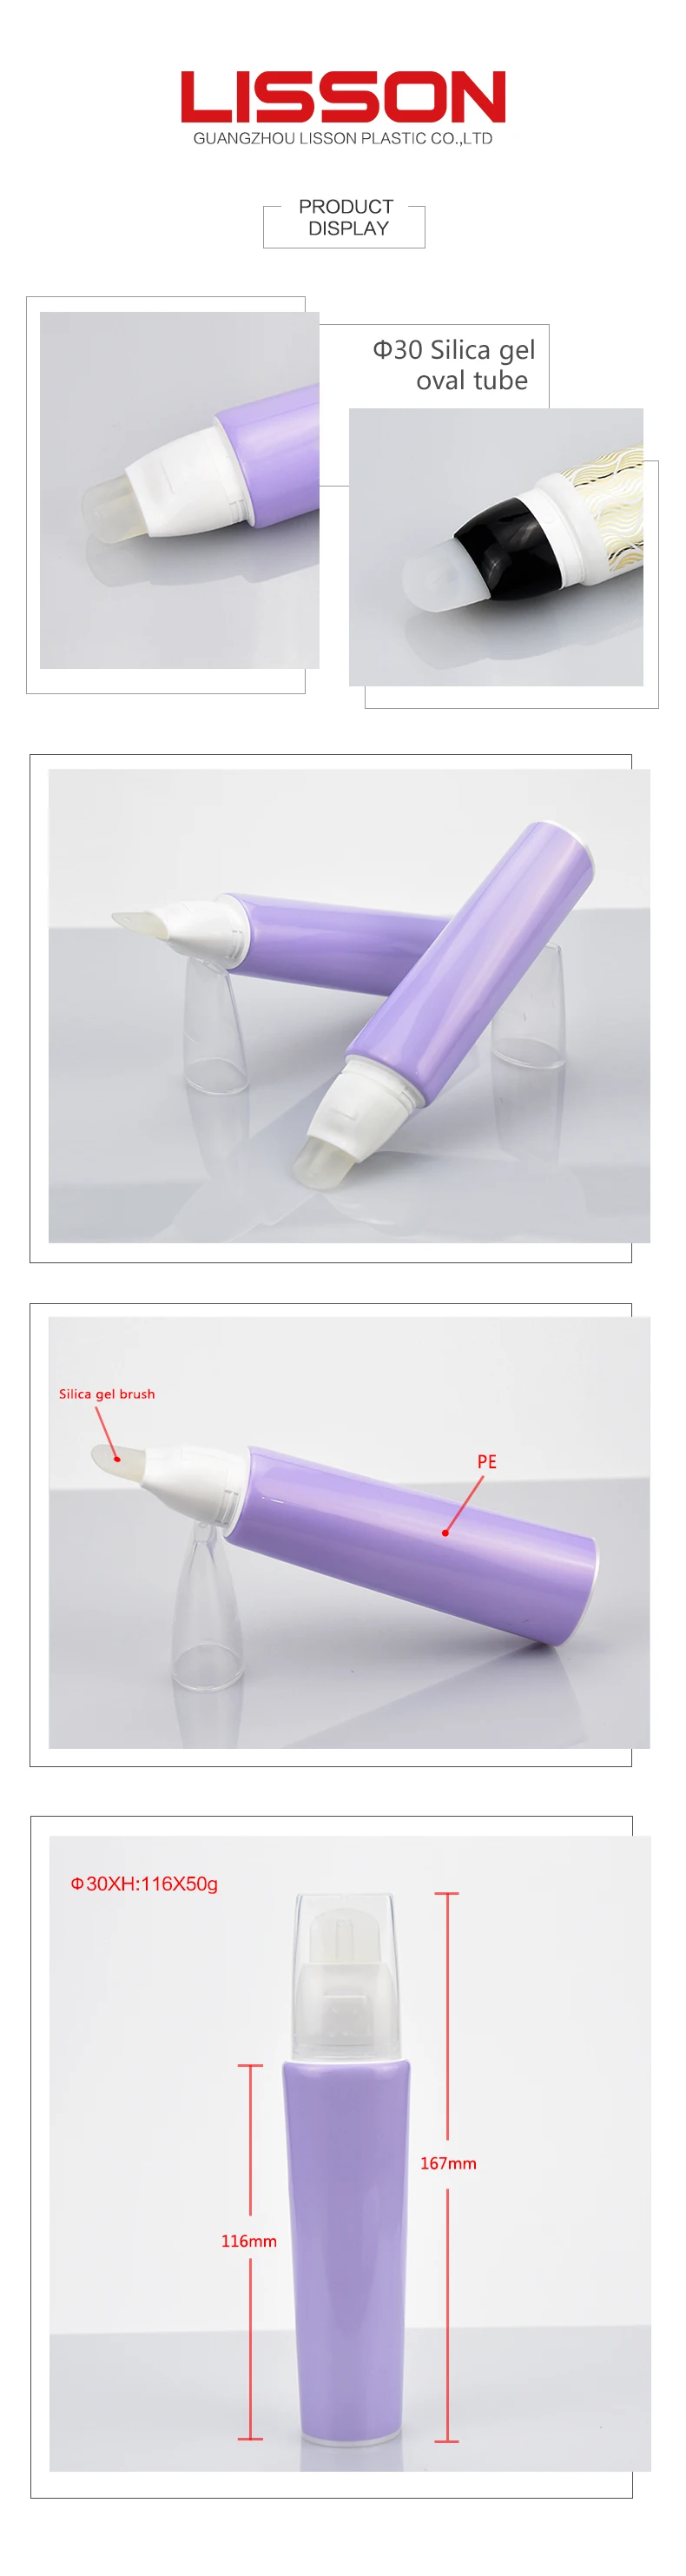 50ml silica gel applicator brush tube for facial treatment/face mask